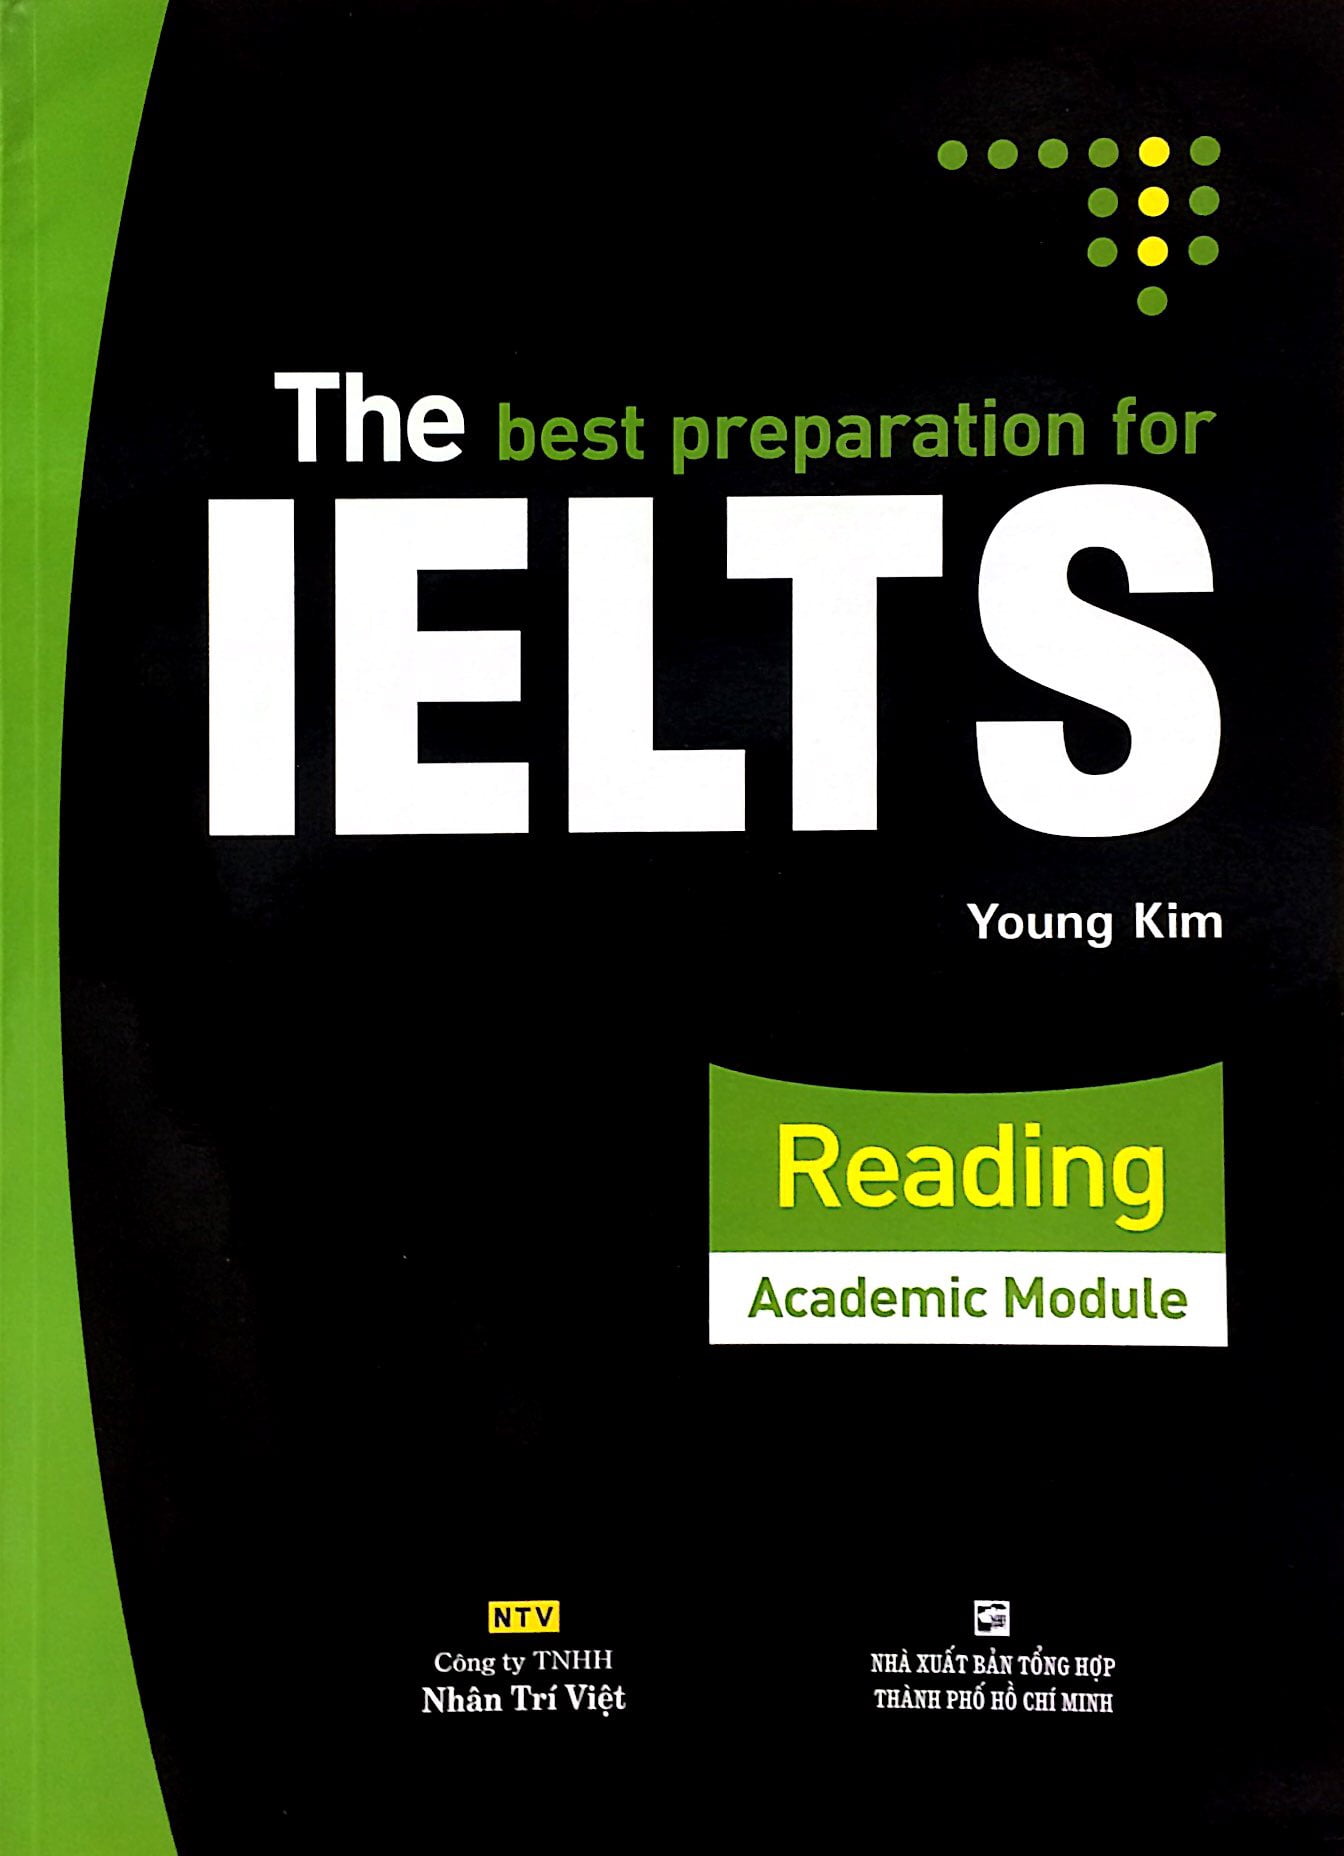 Preparing for reading. The best preparation for IELTS. The best preparation for IELTS reading. Prepare for IELTS. The best preparation for IELTS Listening.